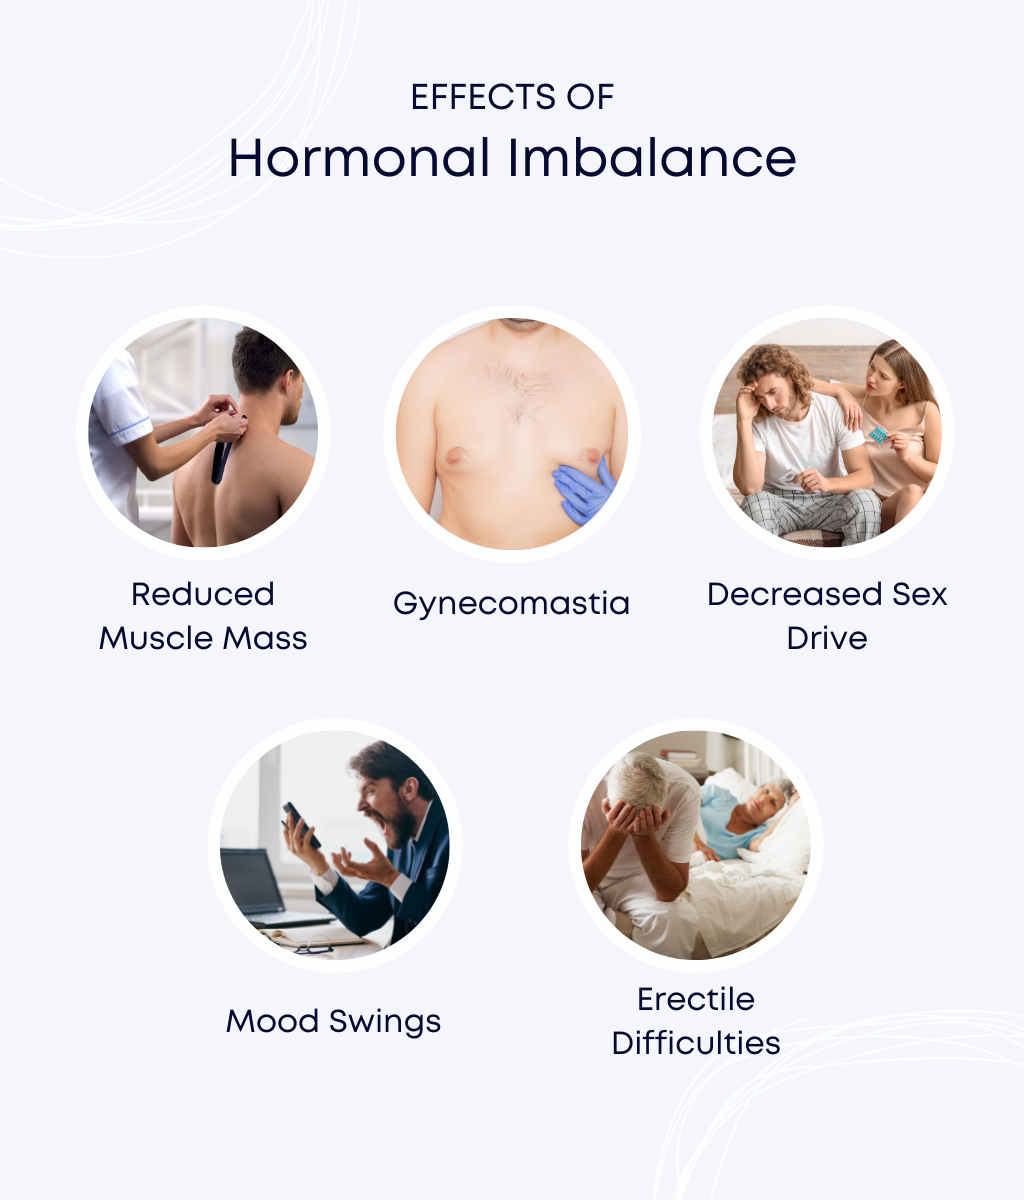 Five Effects of Hormonal Imbalance